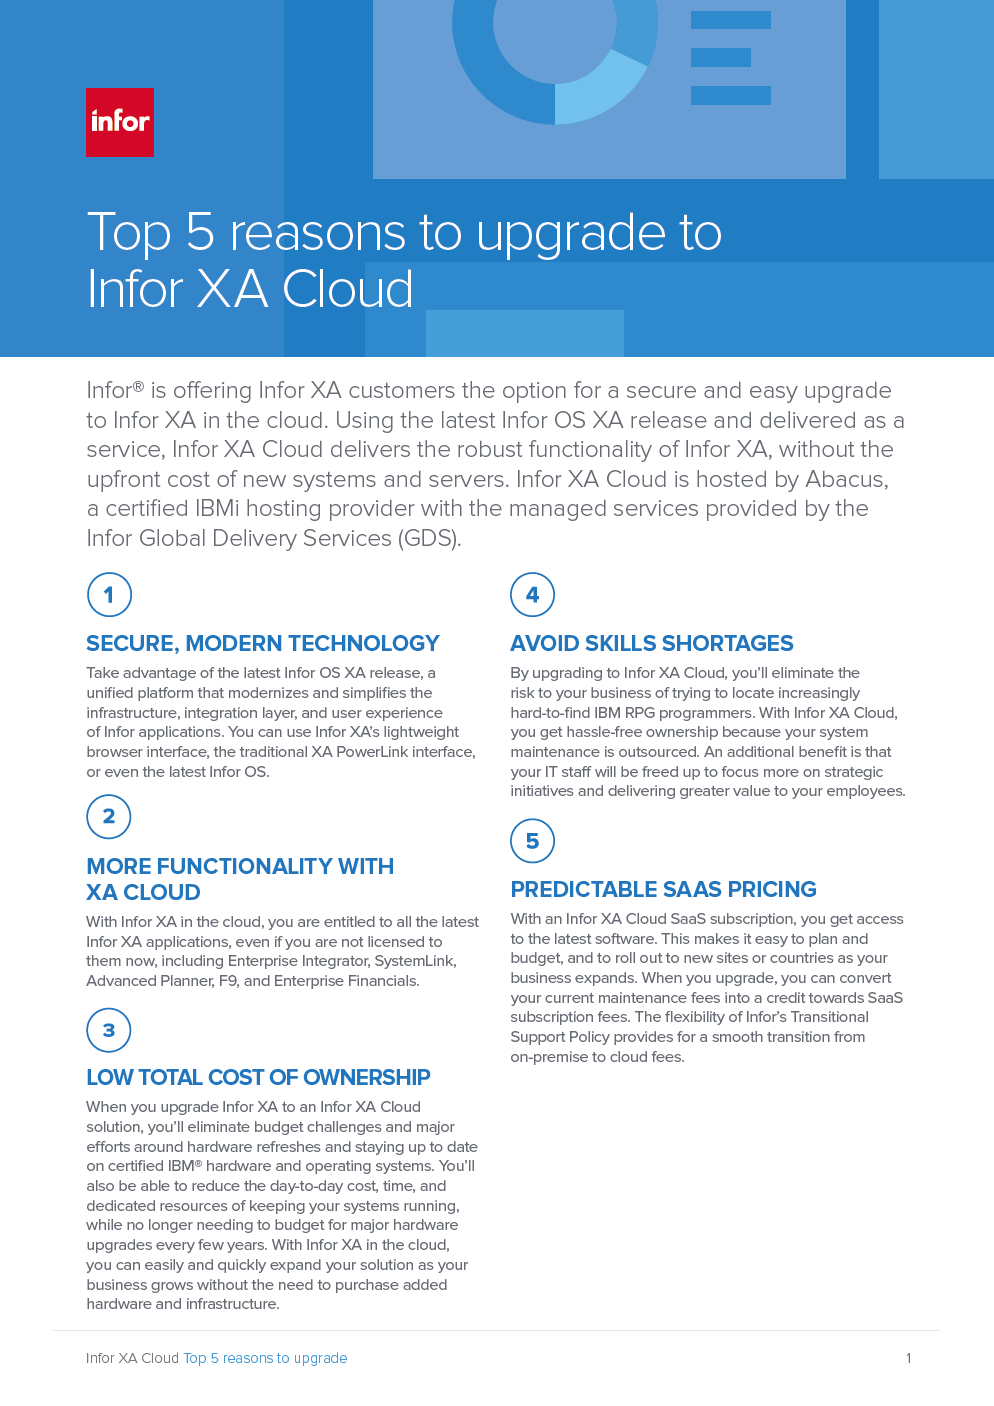 Top 5 Reasons to Upgrade to Infor XA Cloud